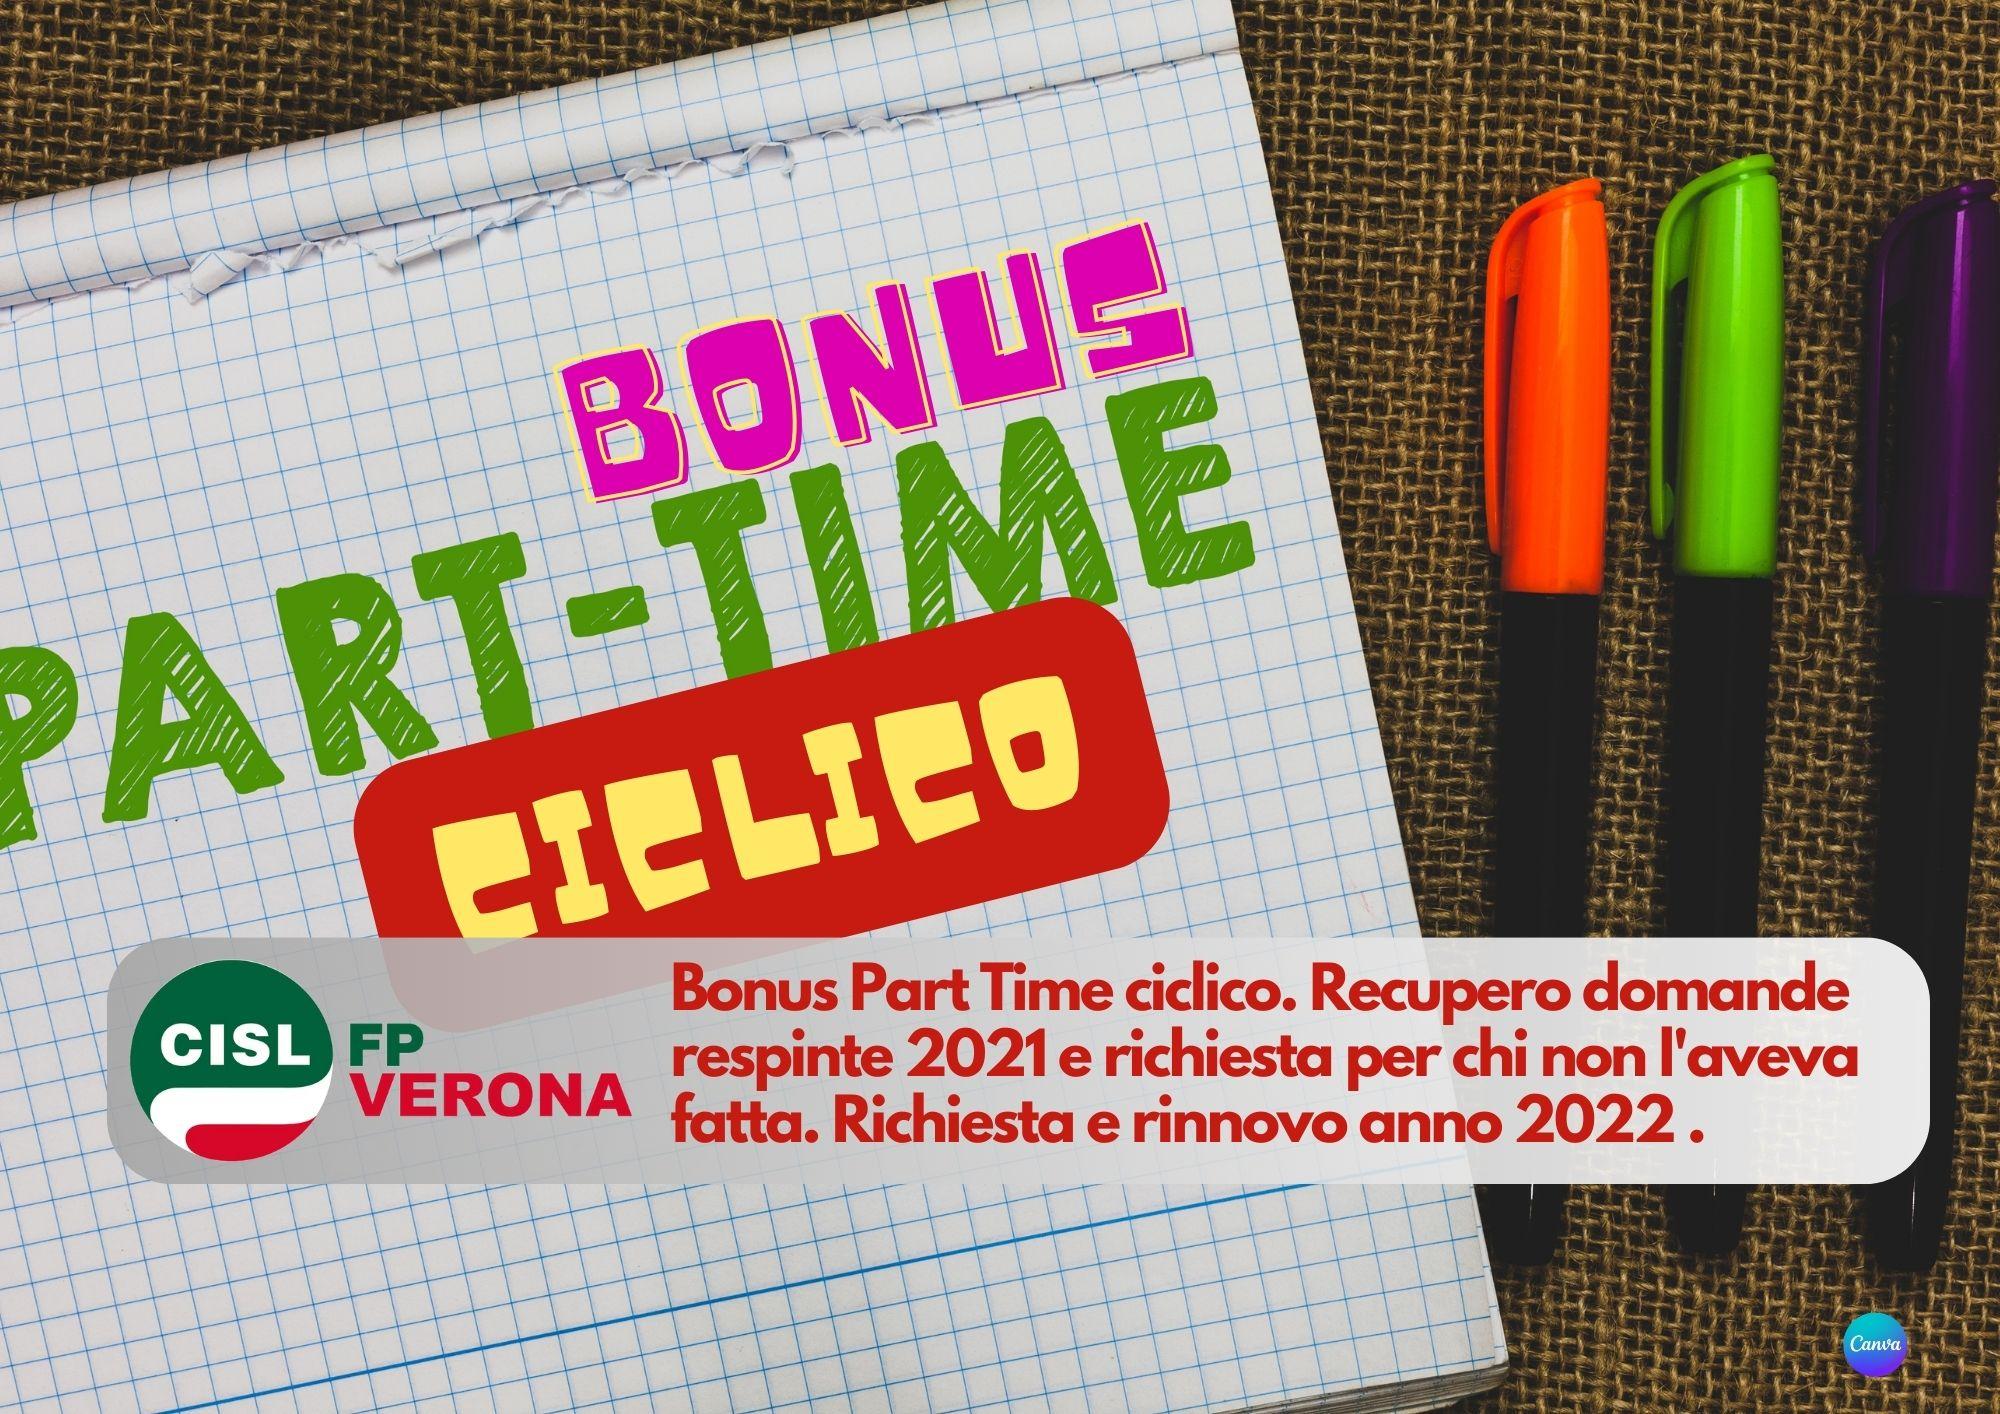 CISL FP Verona. Bonus Part Time ciclico. Recupero domande respinte 2021 e rinnovo anno 2022